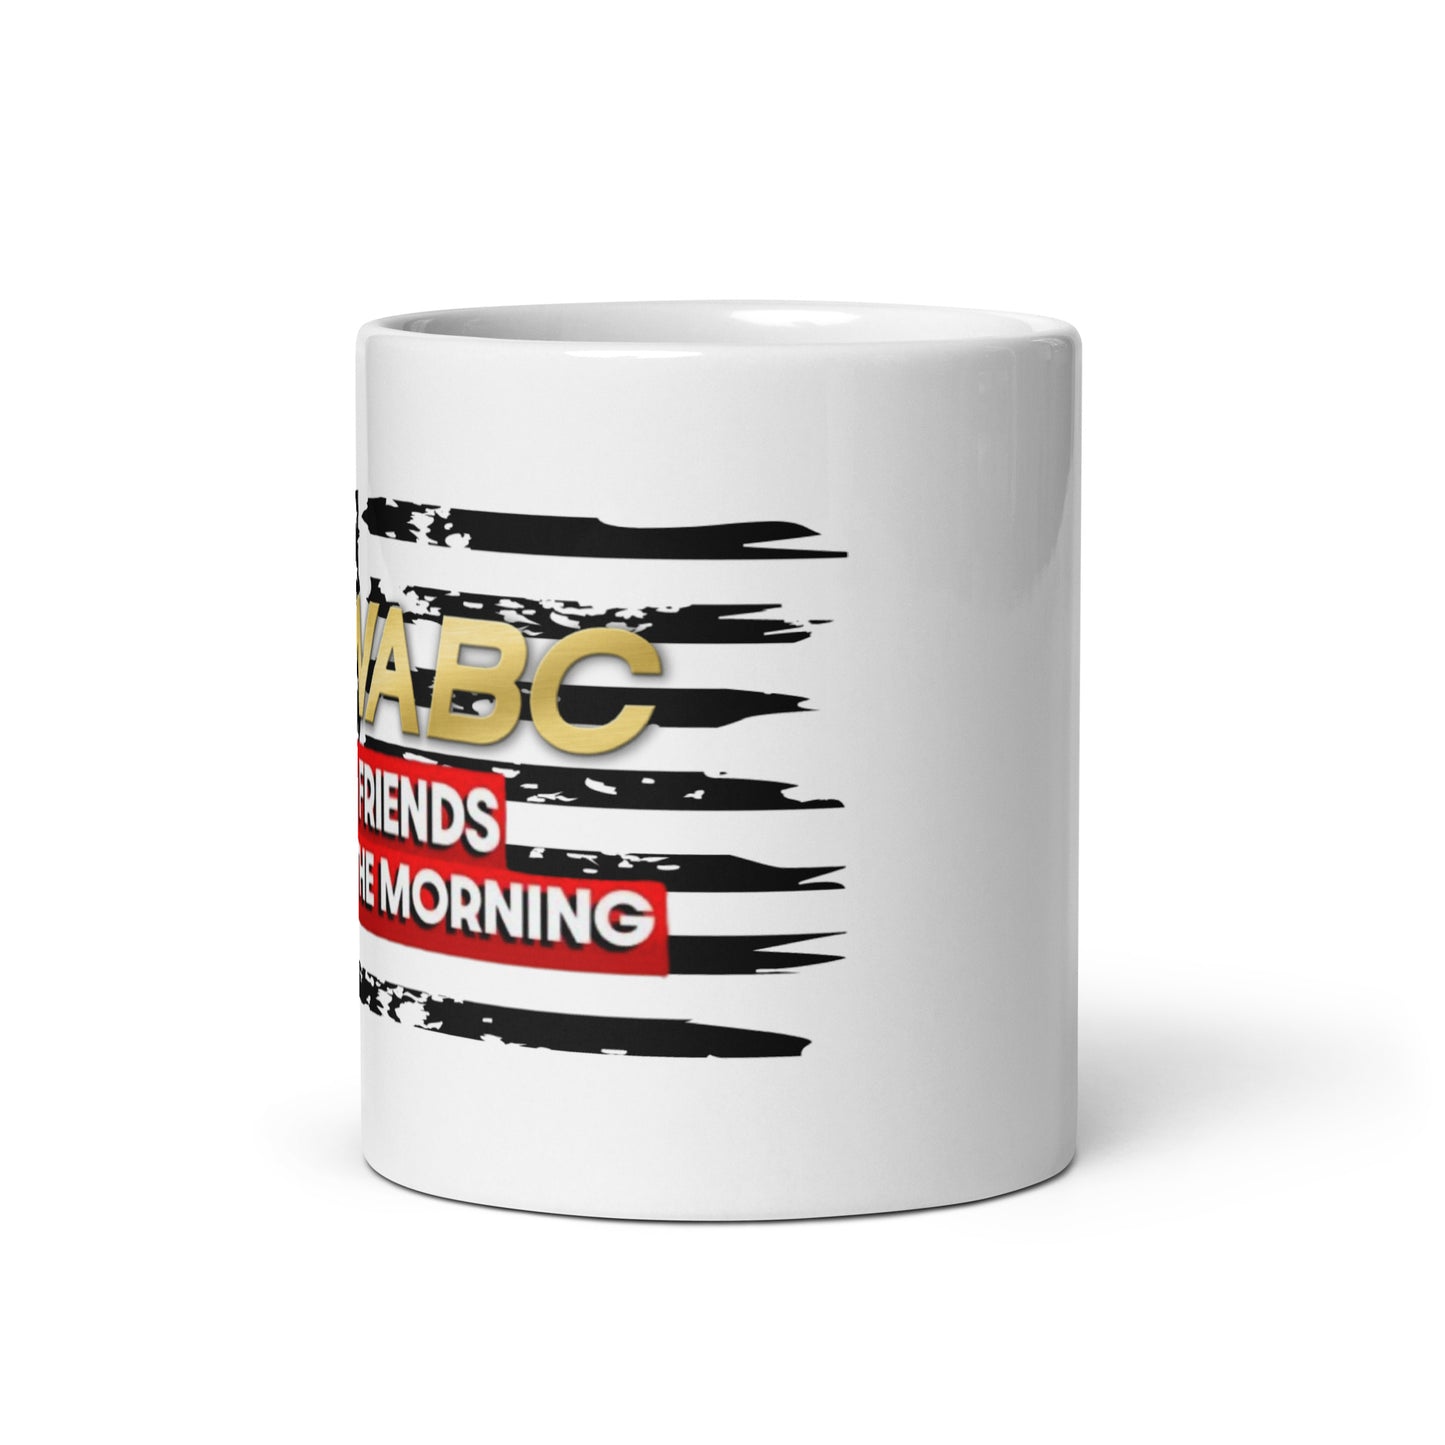 S&FM White glossy mug